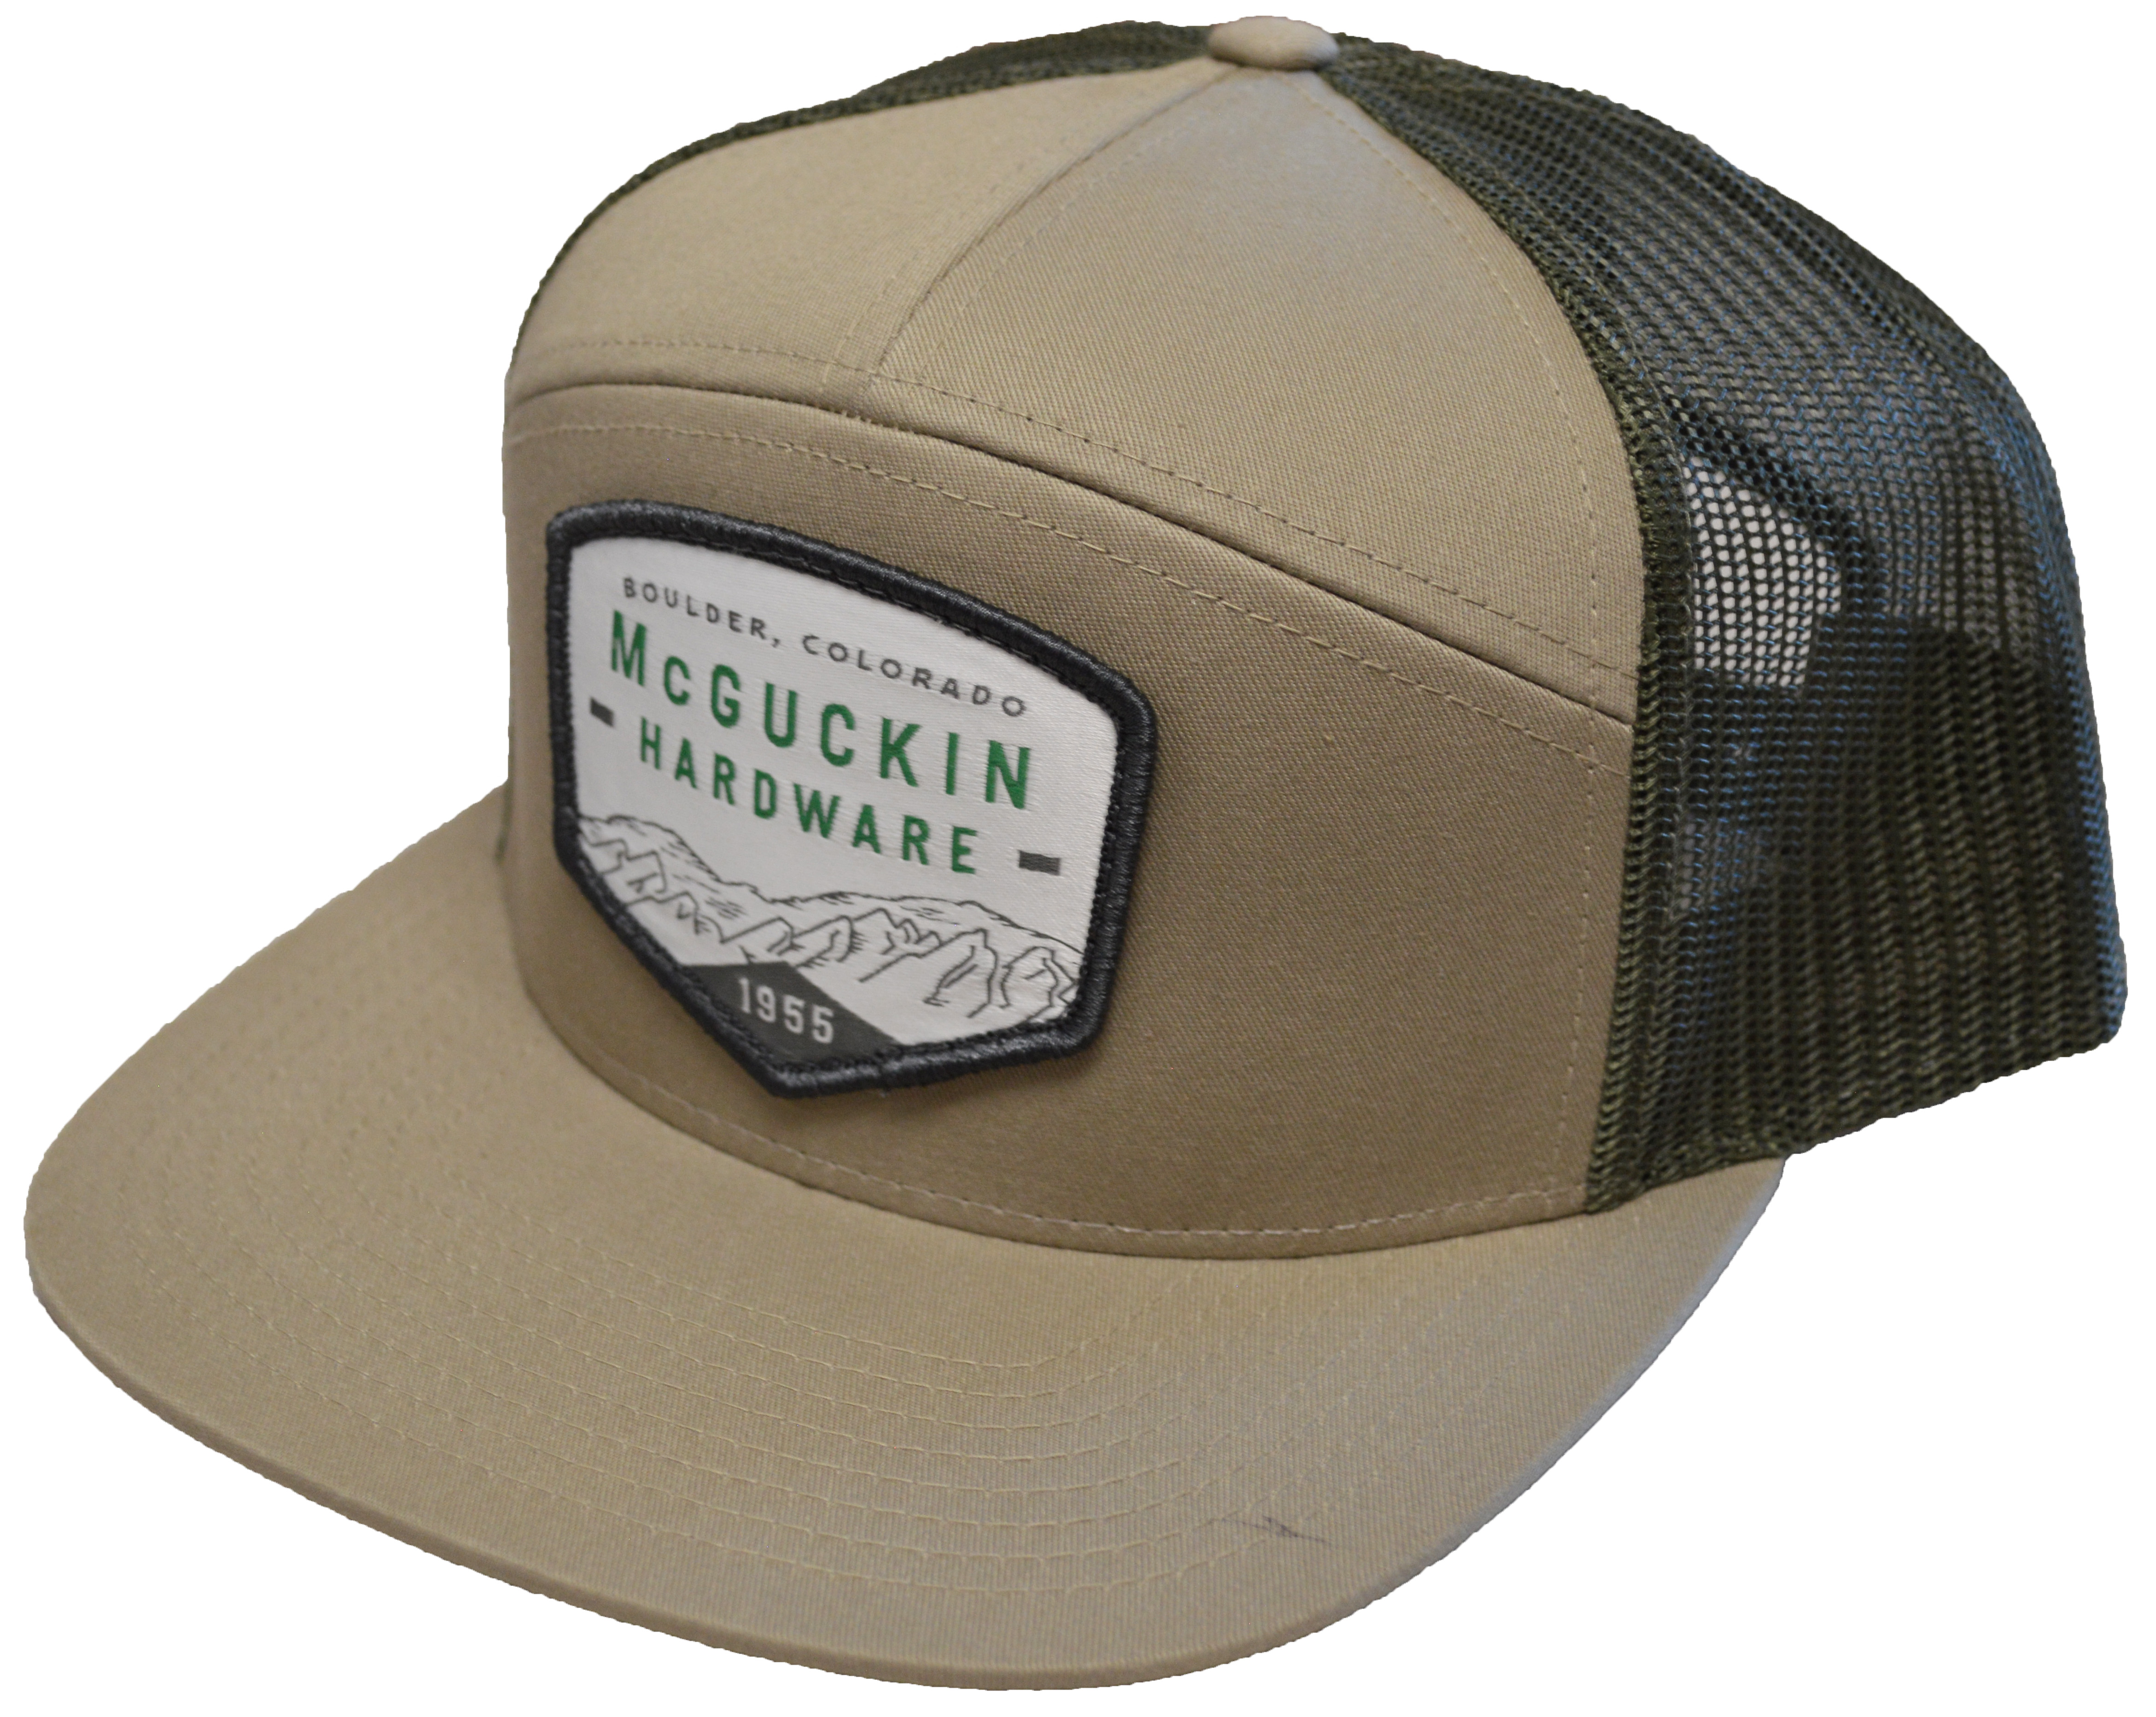 McGuckin 7 Panel Hat Khaki/Loden - 1